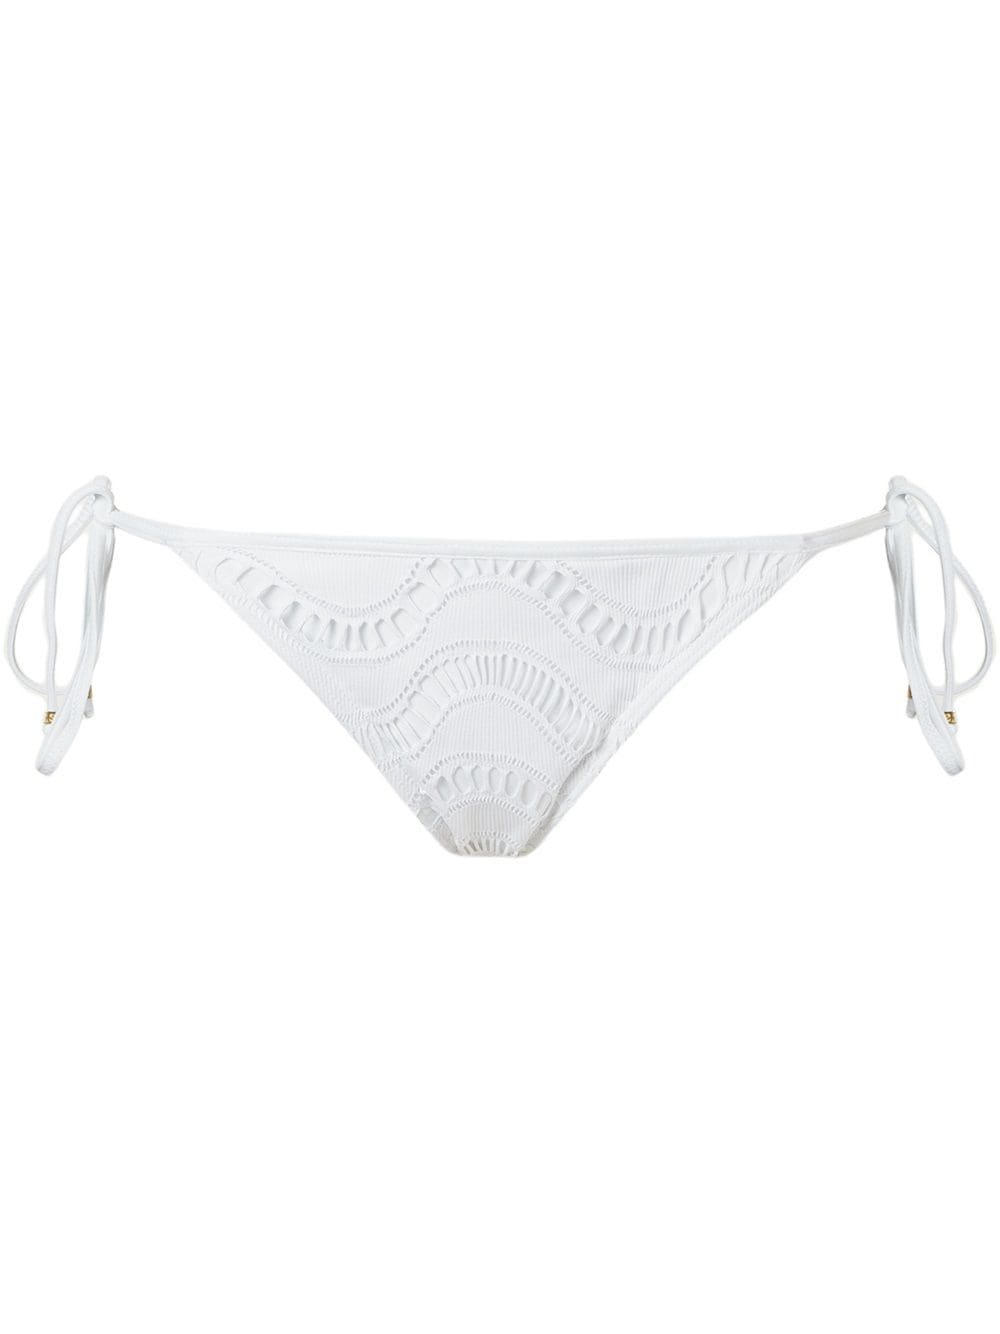 Amir Slama patterned bikini bottom - White von Amir Slama